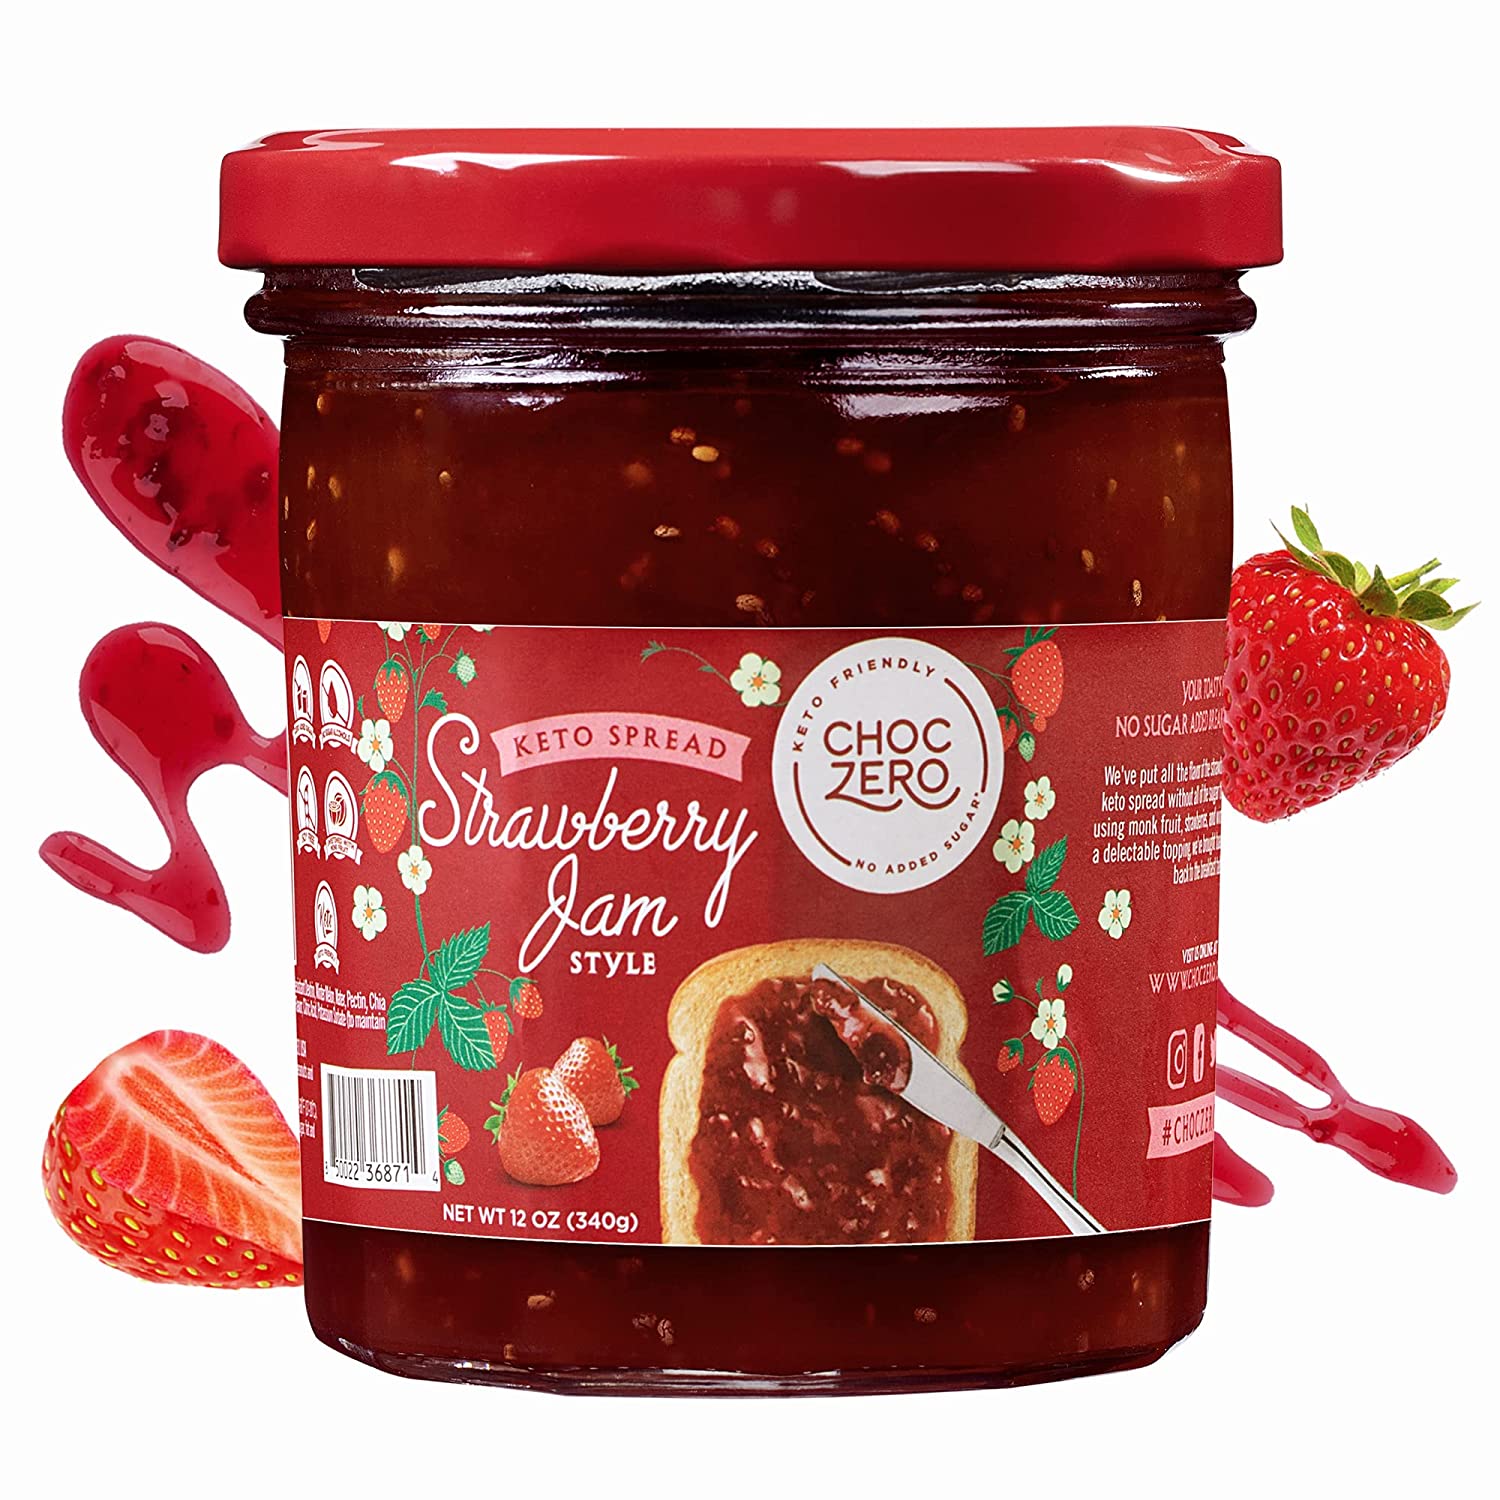 #Flavor_Strawberry Jam